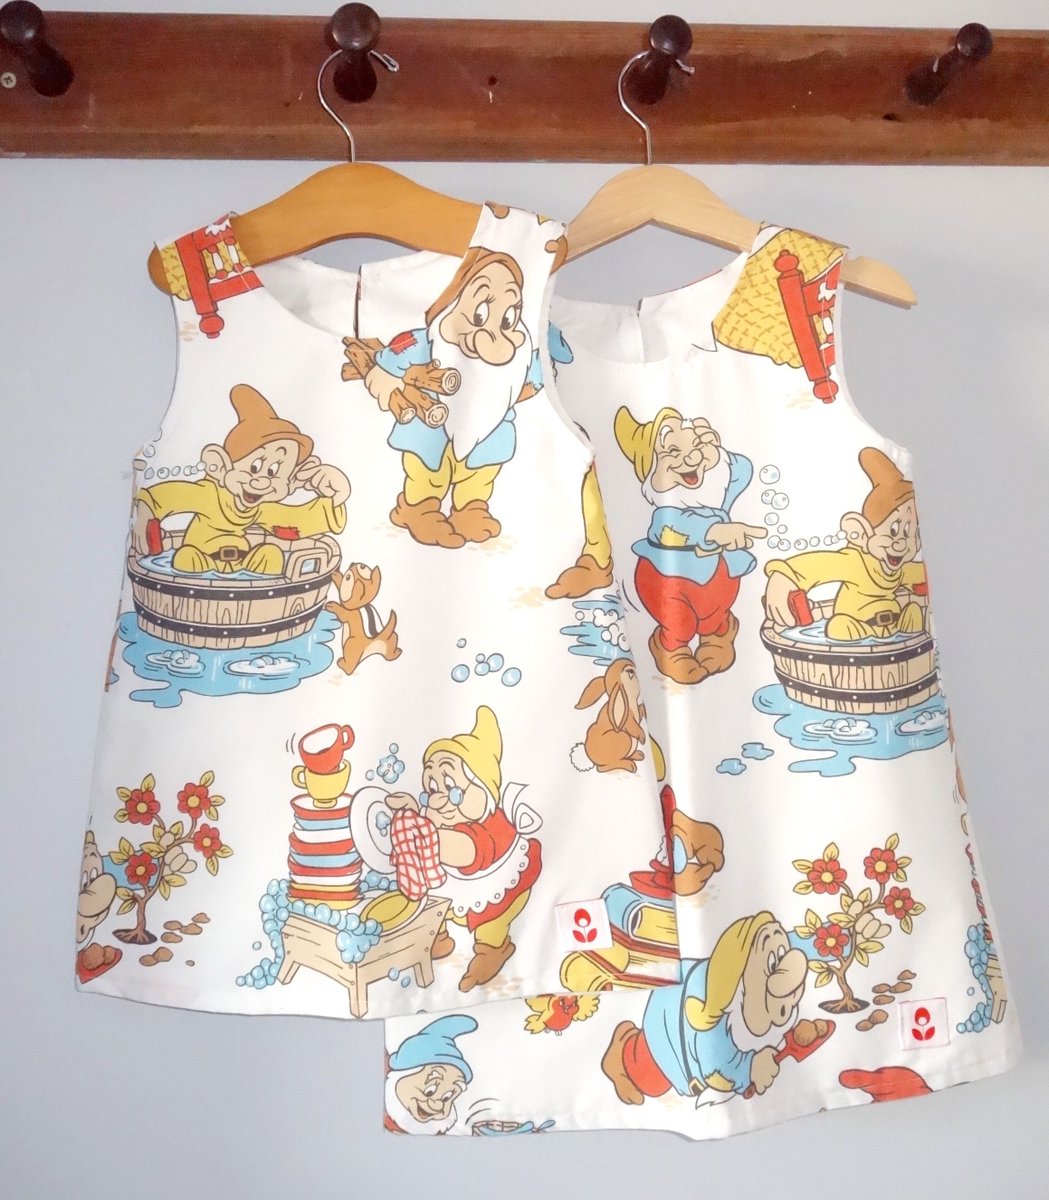 Vintage Snow White and the seven dwarfs fabric dresses buff.ly/2HnFbJ8 #snowwhite #vintagefabric #upcycled #vintagekids #retrokids #upcycled #upcyclingfashion #handmadeforkids #kidswear #girlsdresses #oneoffpieces